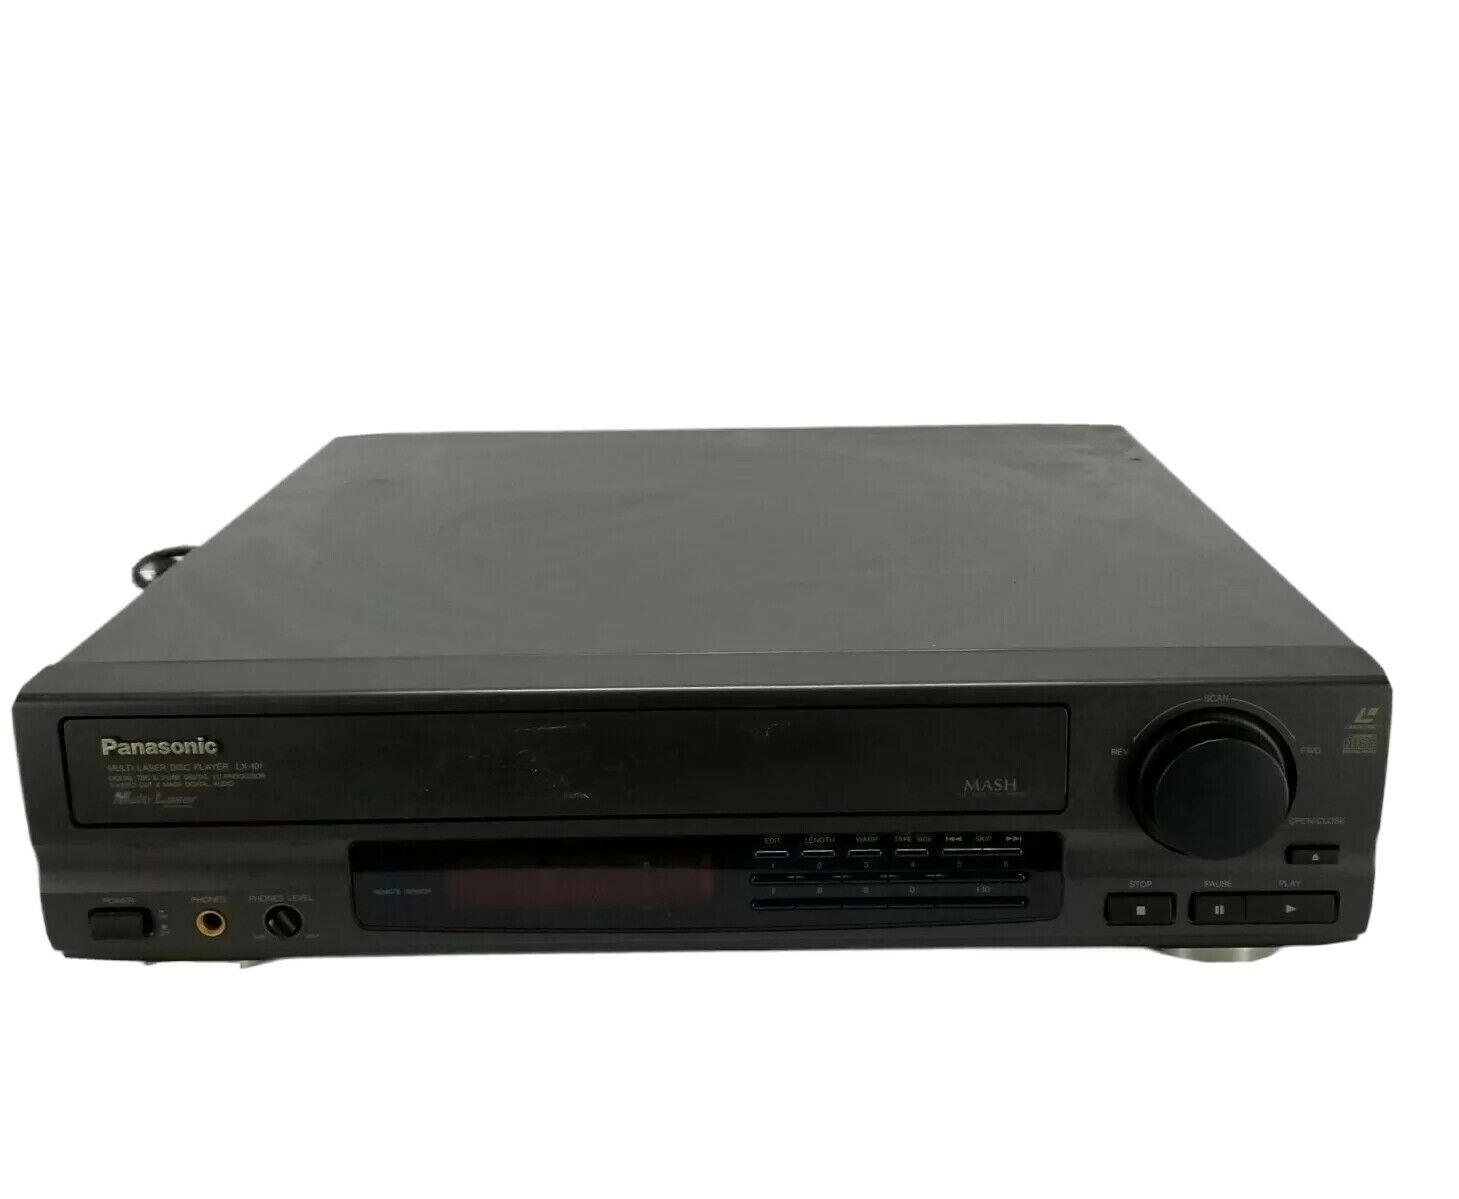 Panasonic Lx-101u  Multi Laser Disc Player Mash  May 1991